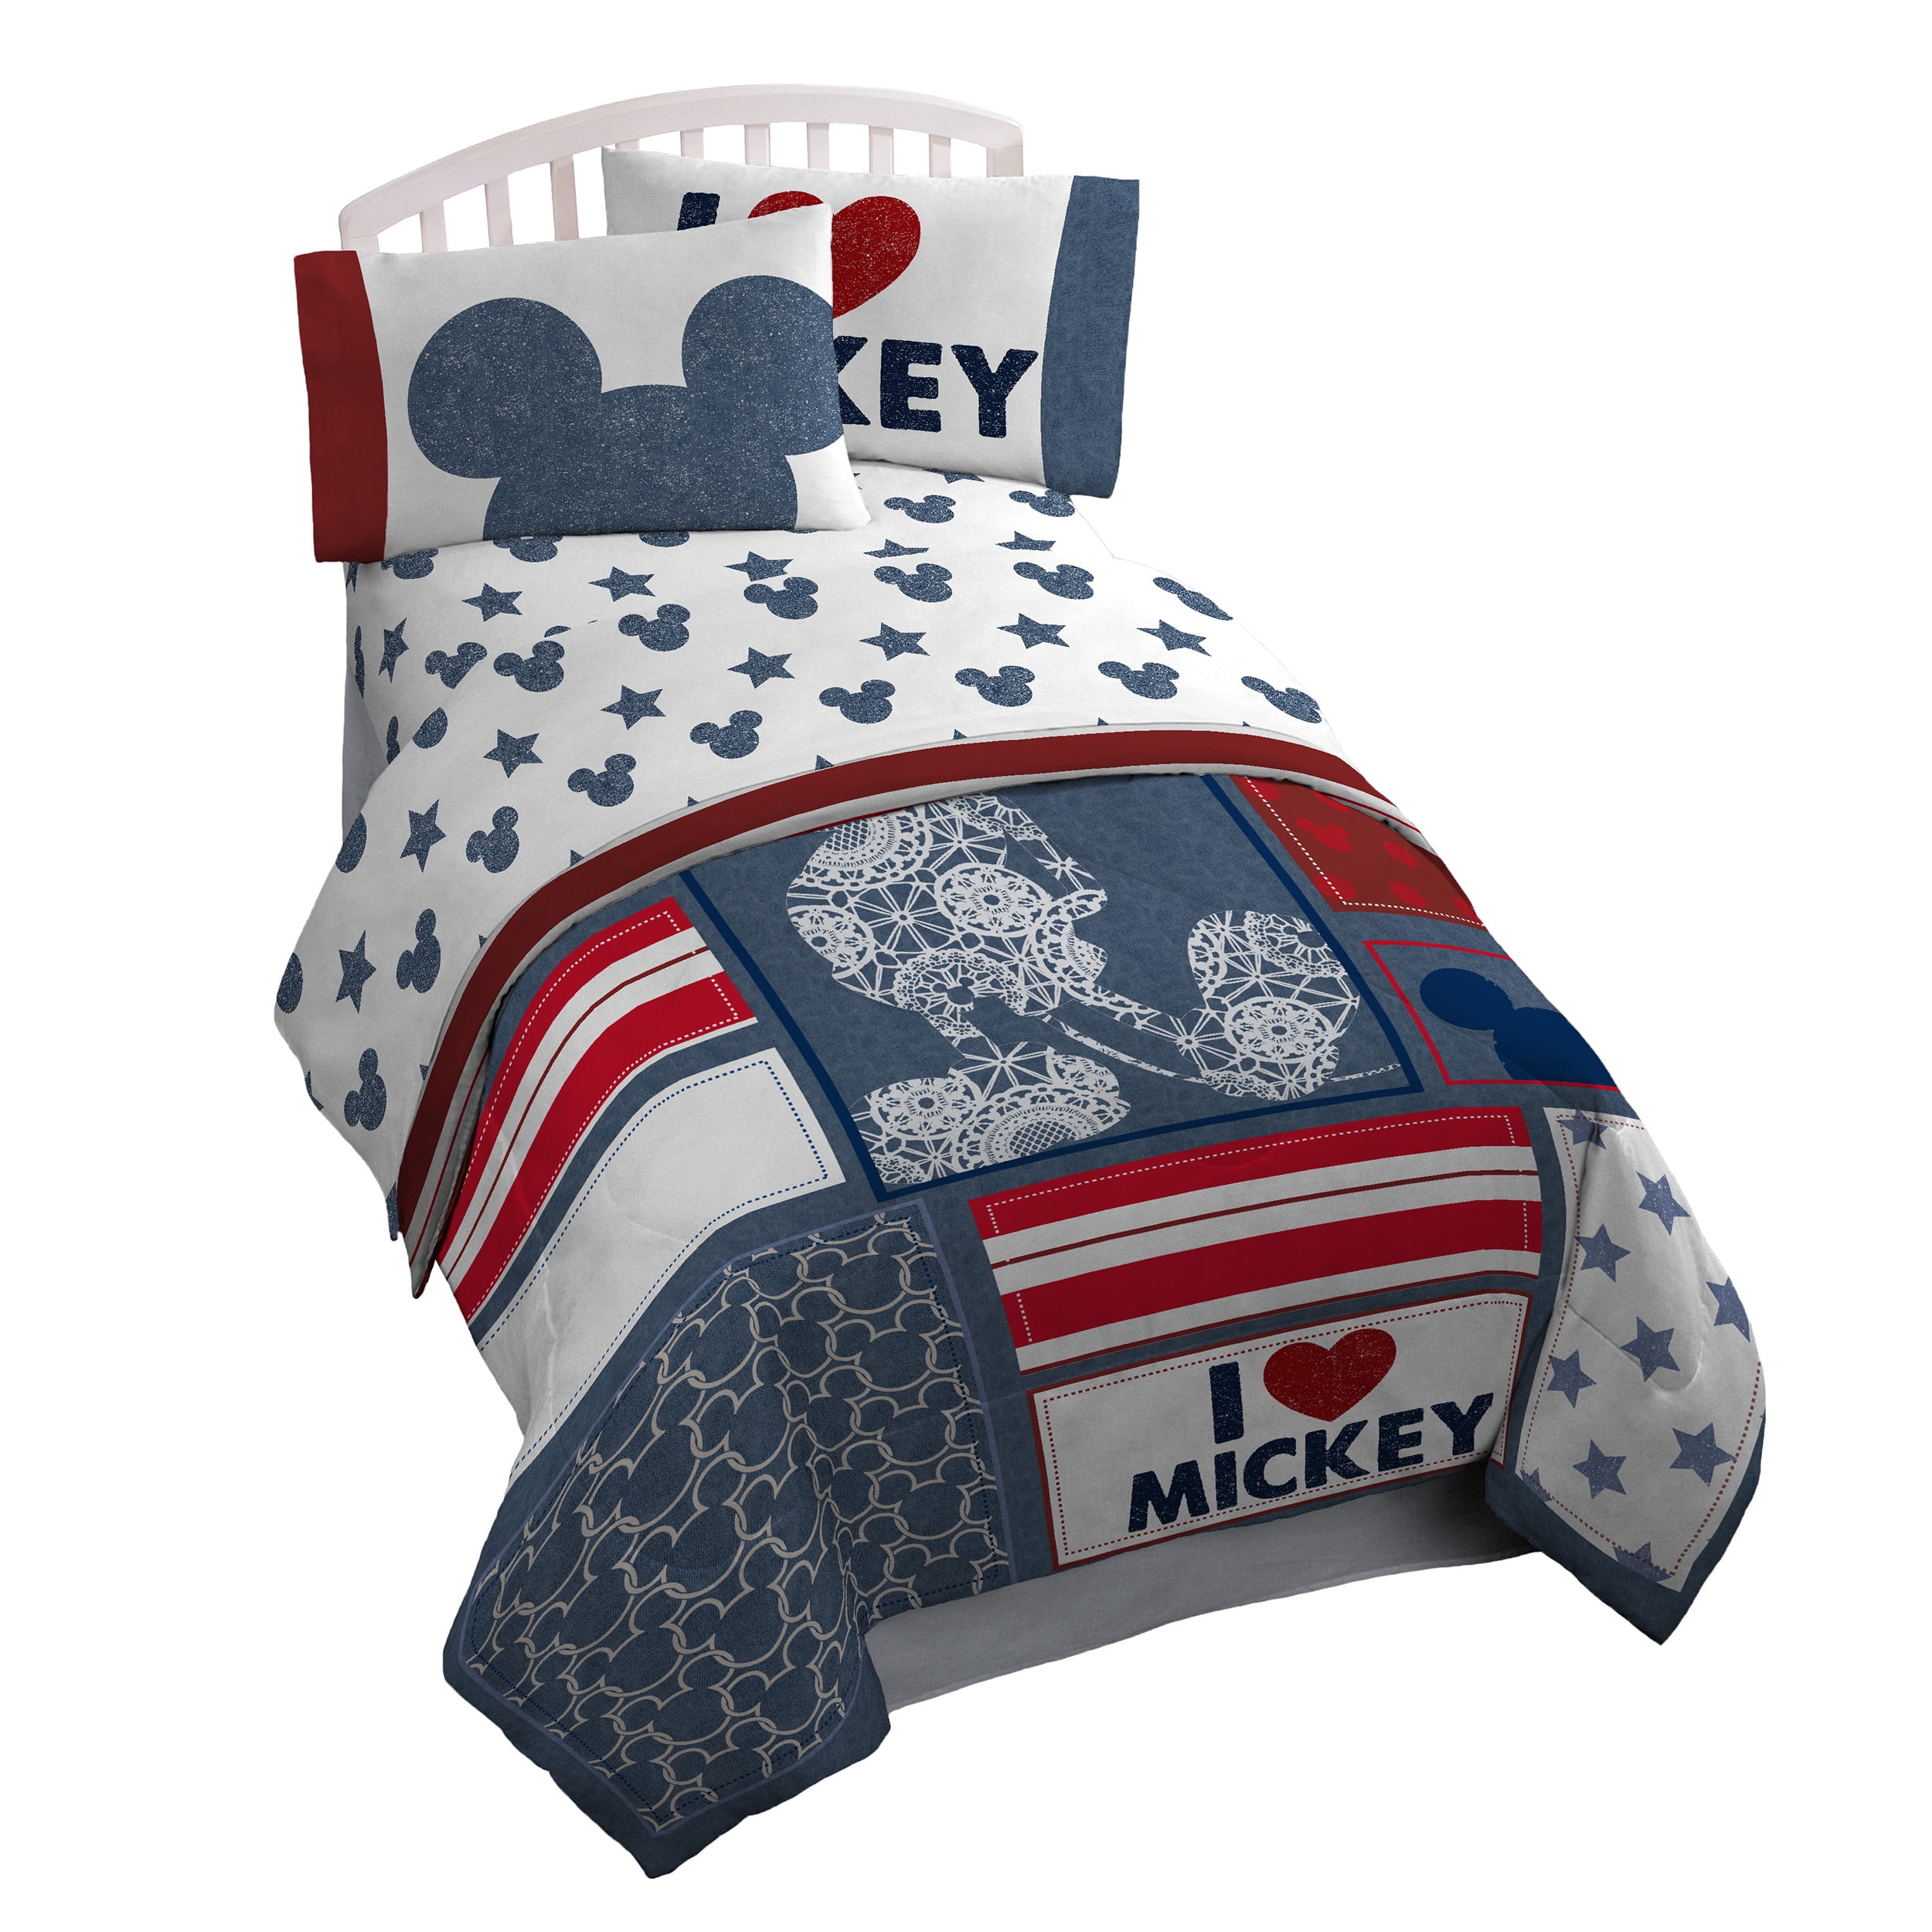 Disney Mickey Mouse Classic Red Comforter Shams Set New Boys Home Bedding Decor 